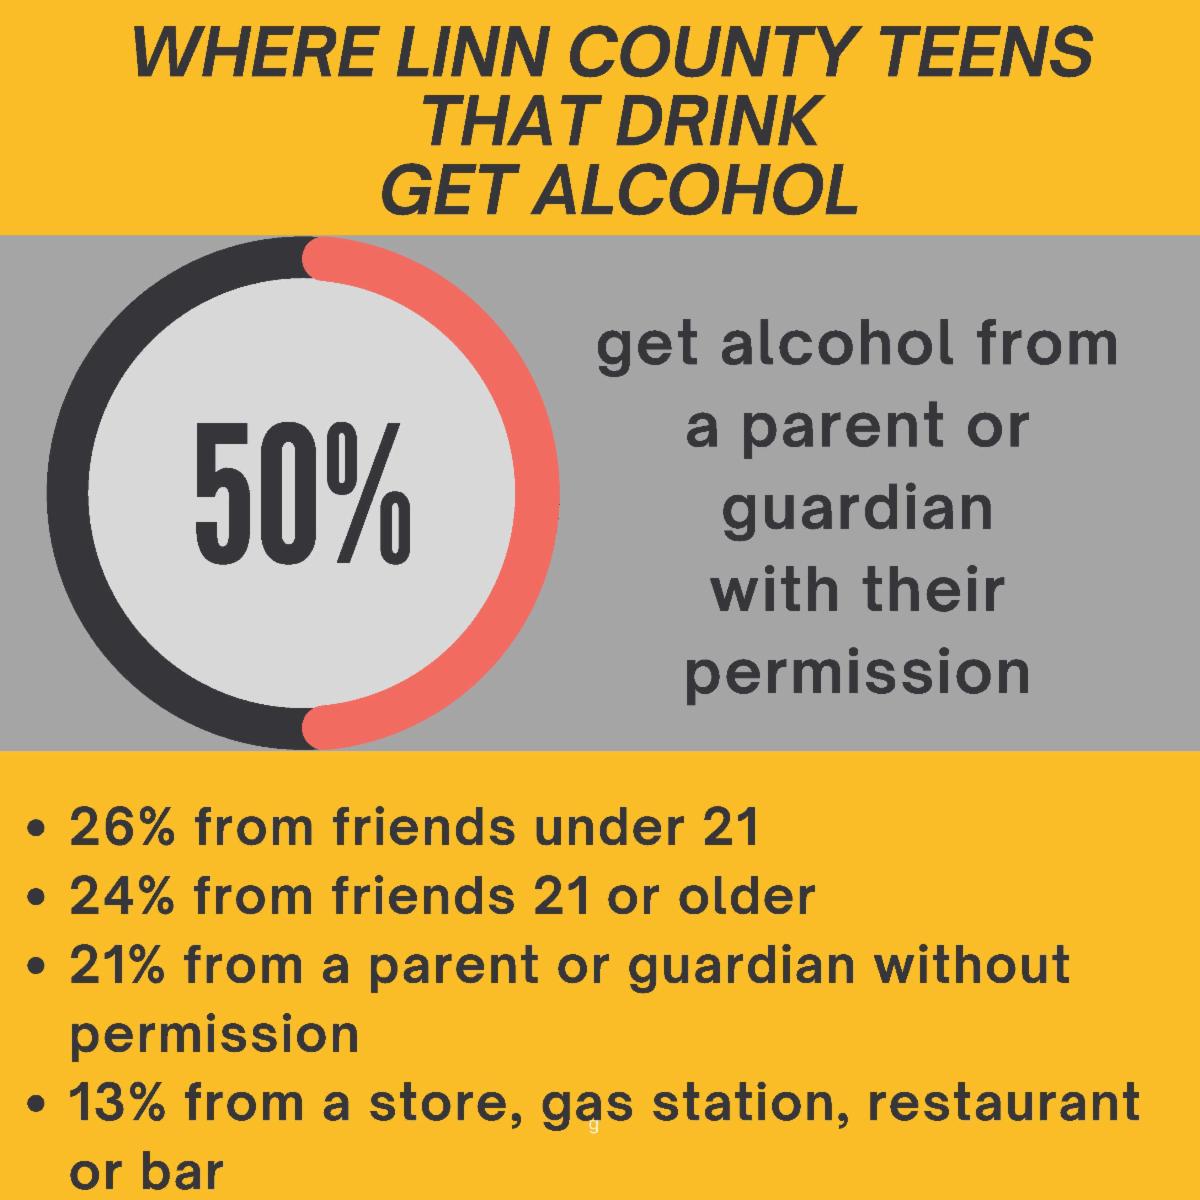 Where Do Linn County Teens Get Alcohol?